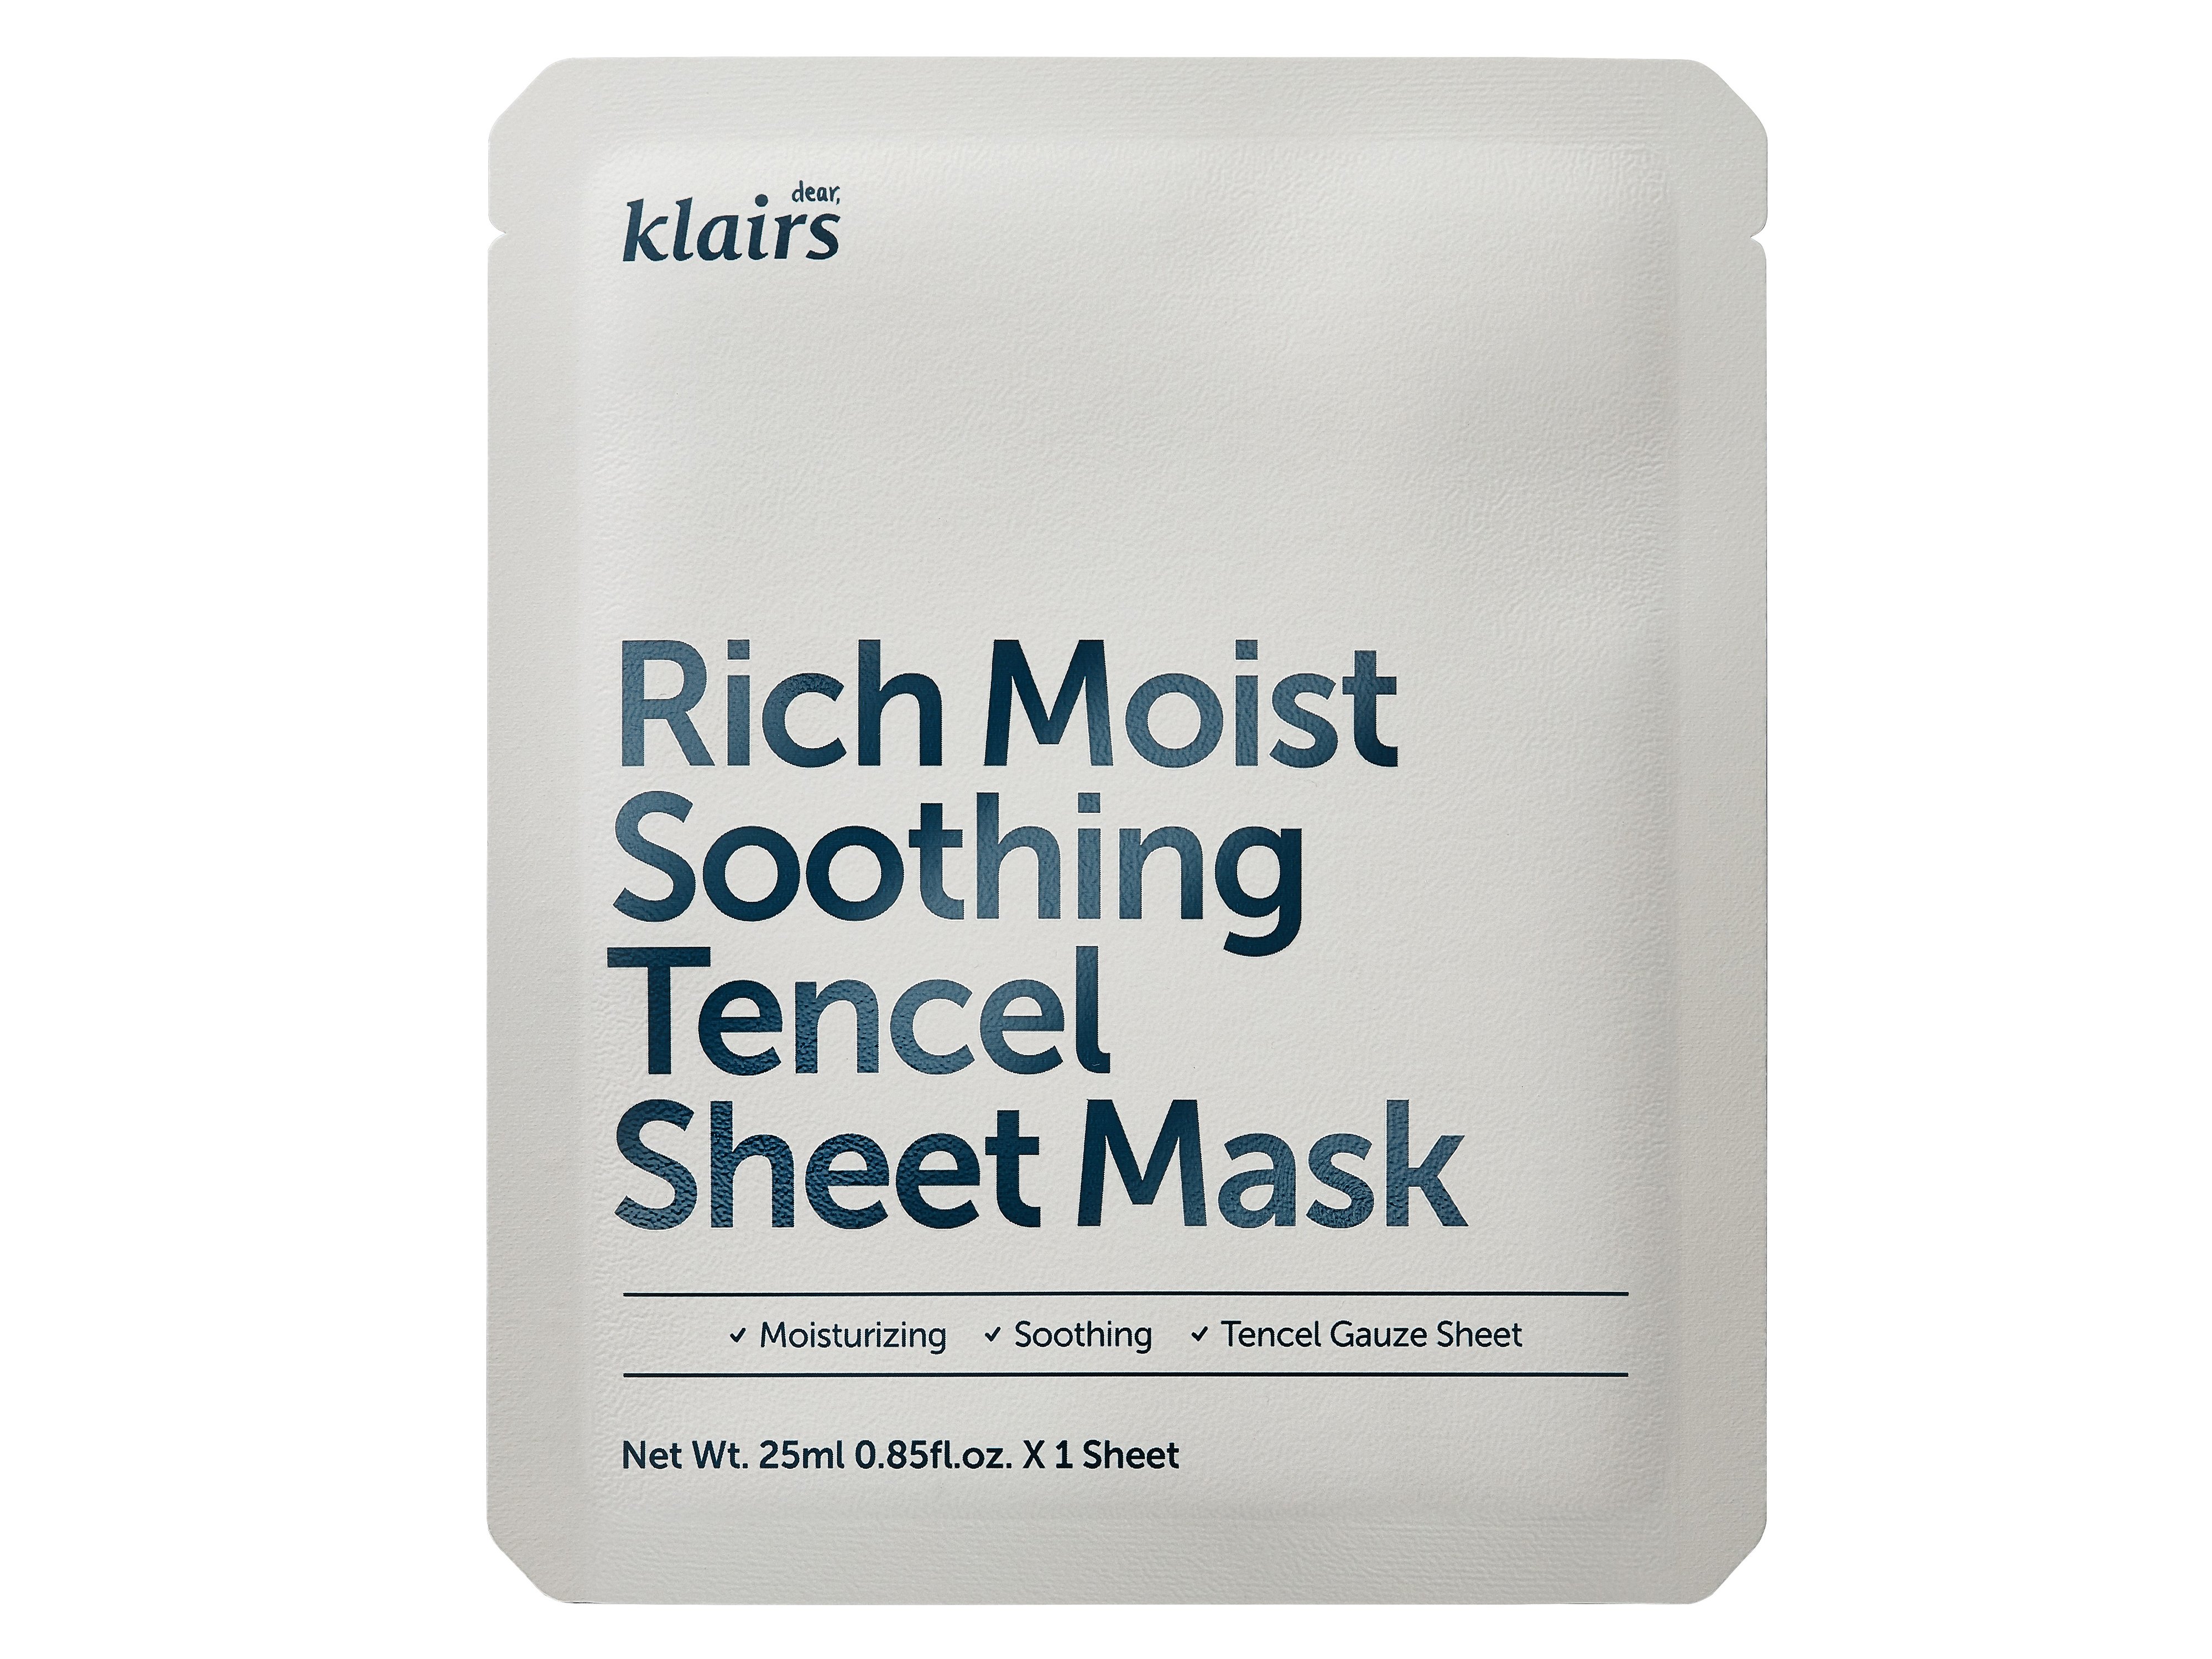 Klairs Rich Moist Soothing Tencel Sheet Mask, 1 stk